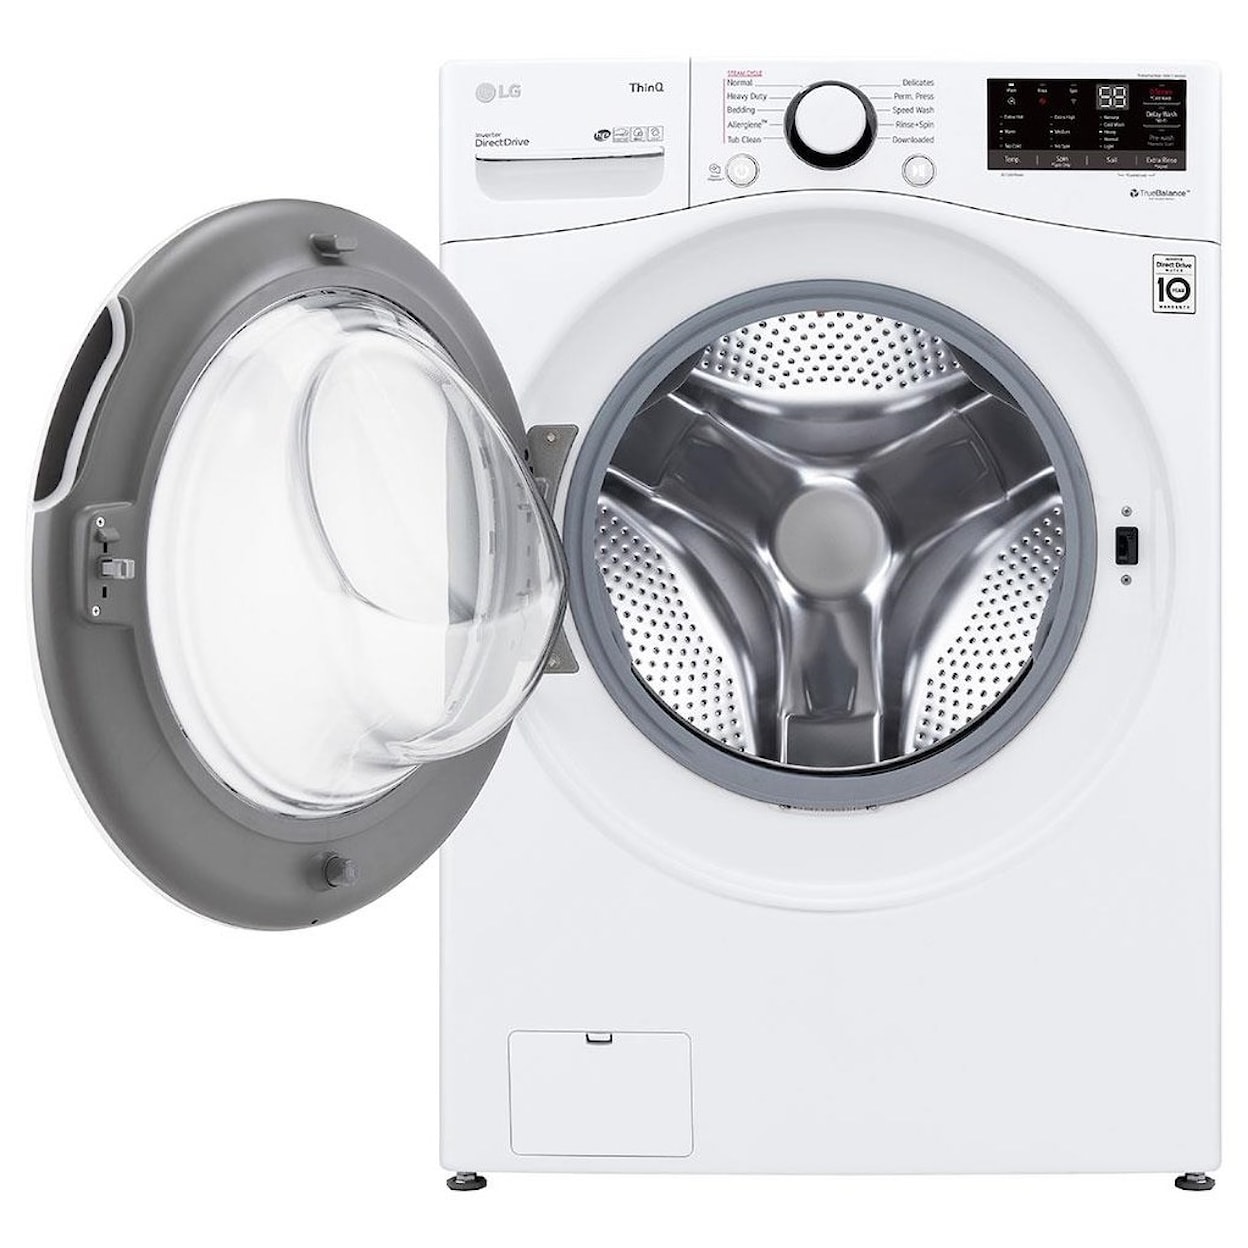 LG Appliances Washers 4.5 CF SMART WASHER